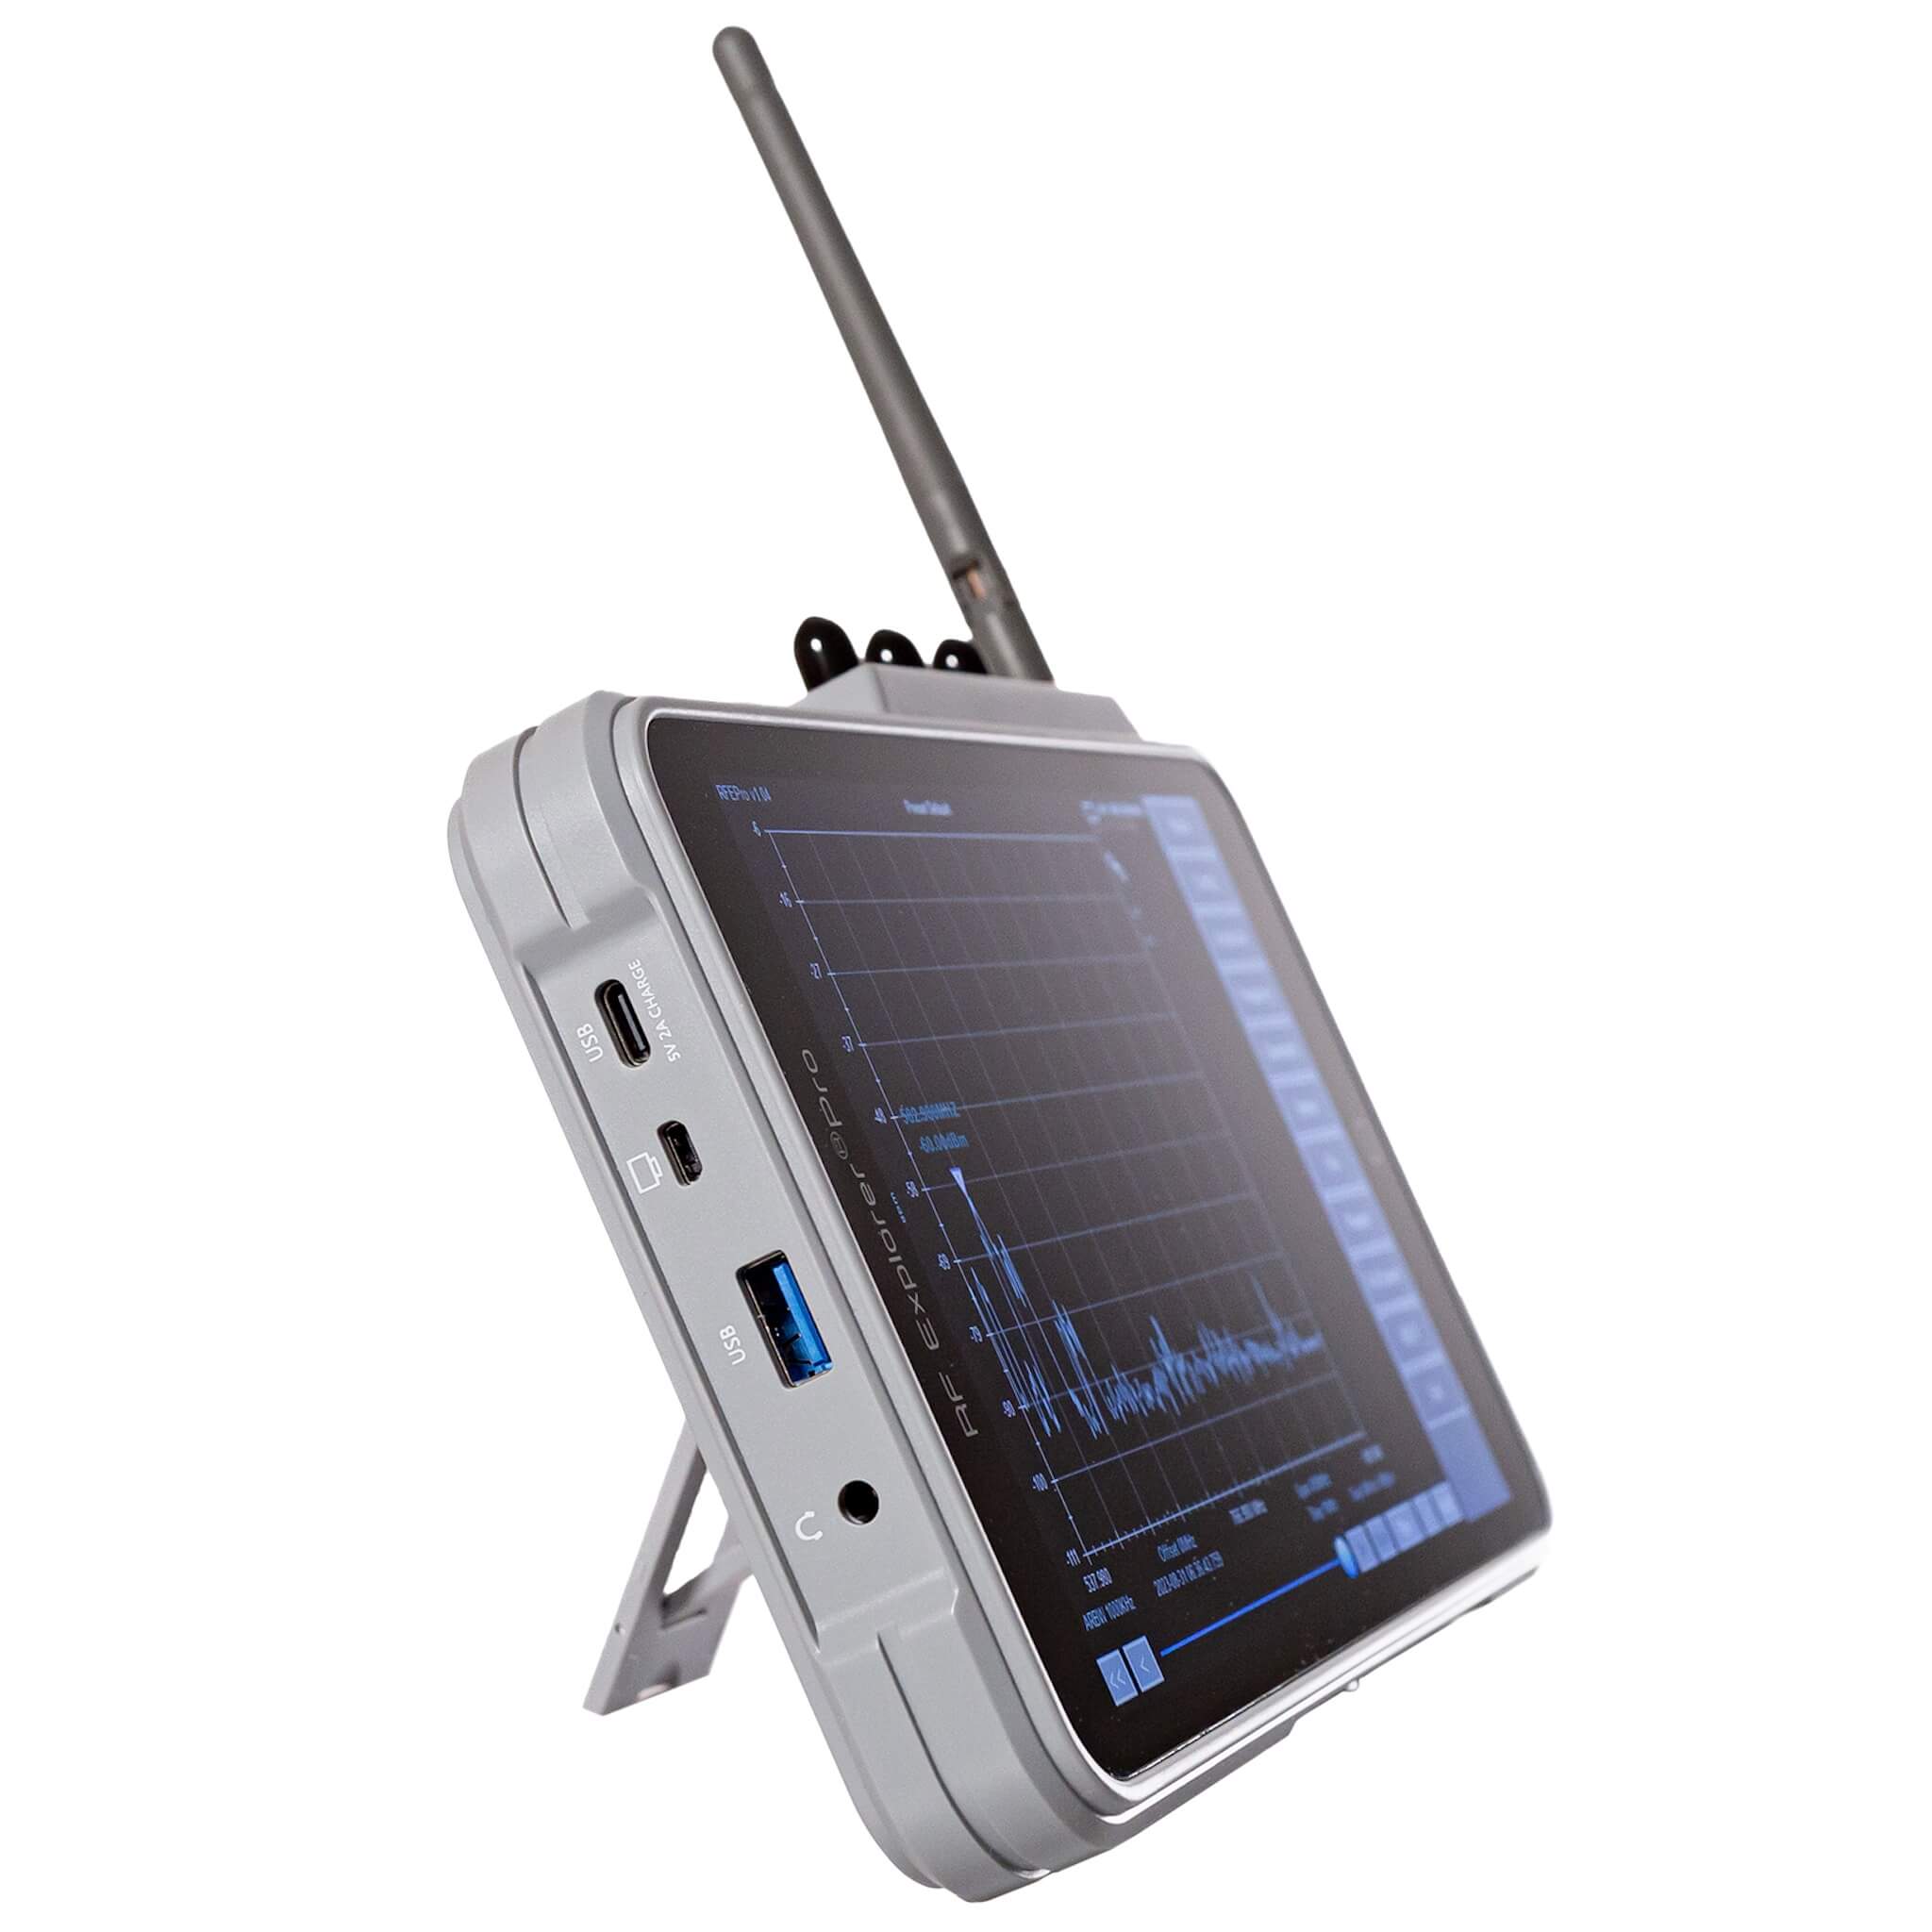 RF Venue RF Explorer Pro - Advanced Touchscreen RF Spectrum Analyzer, side